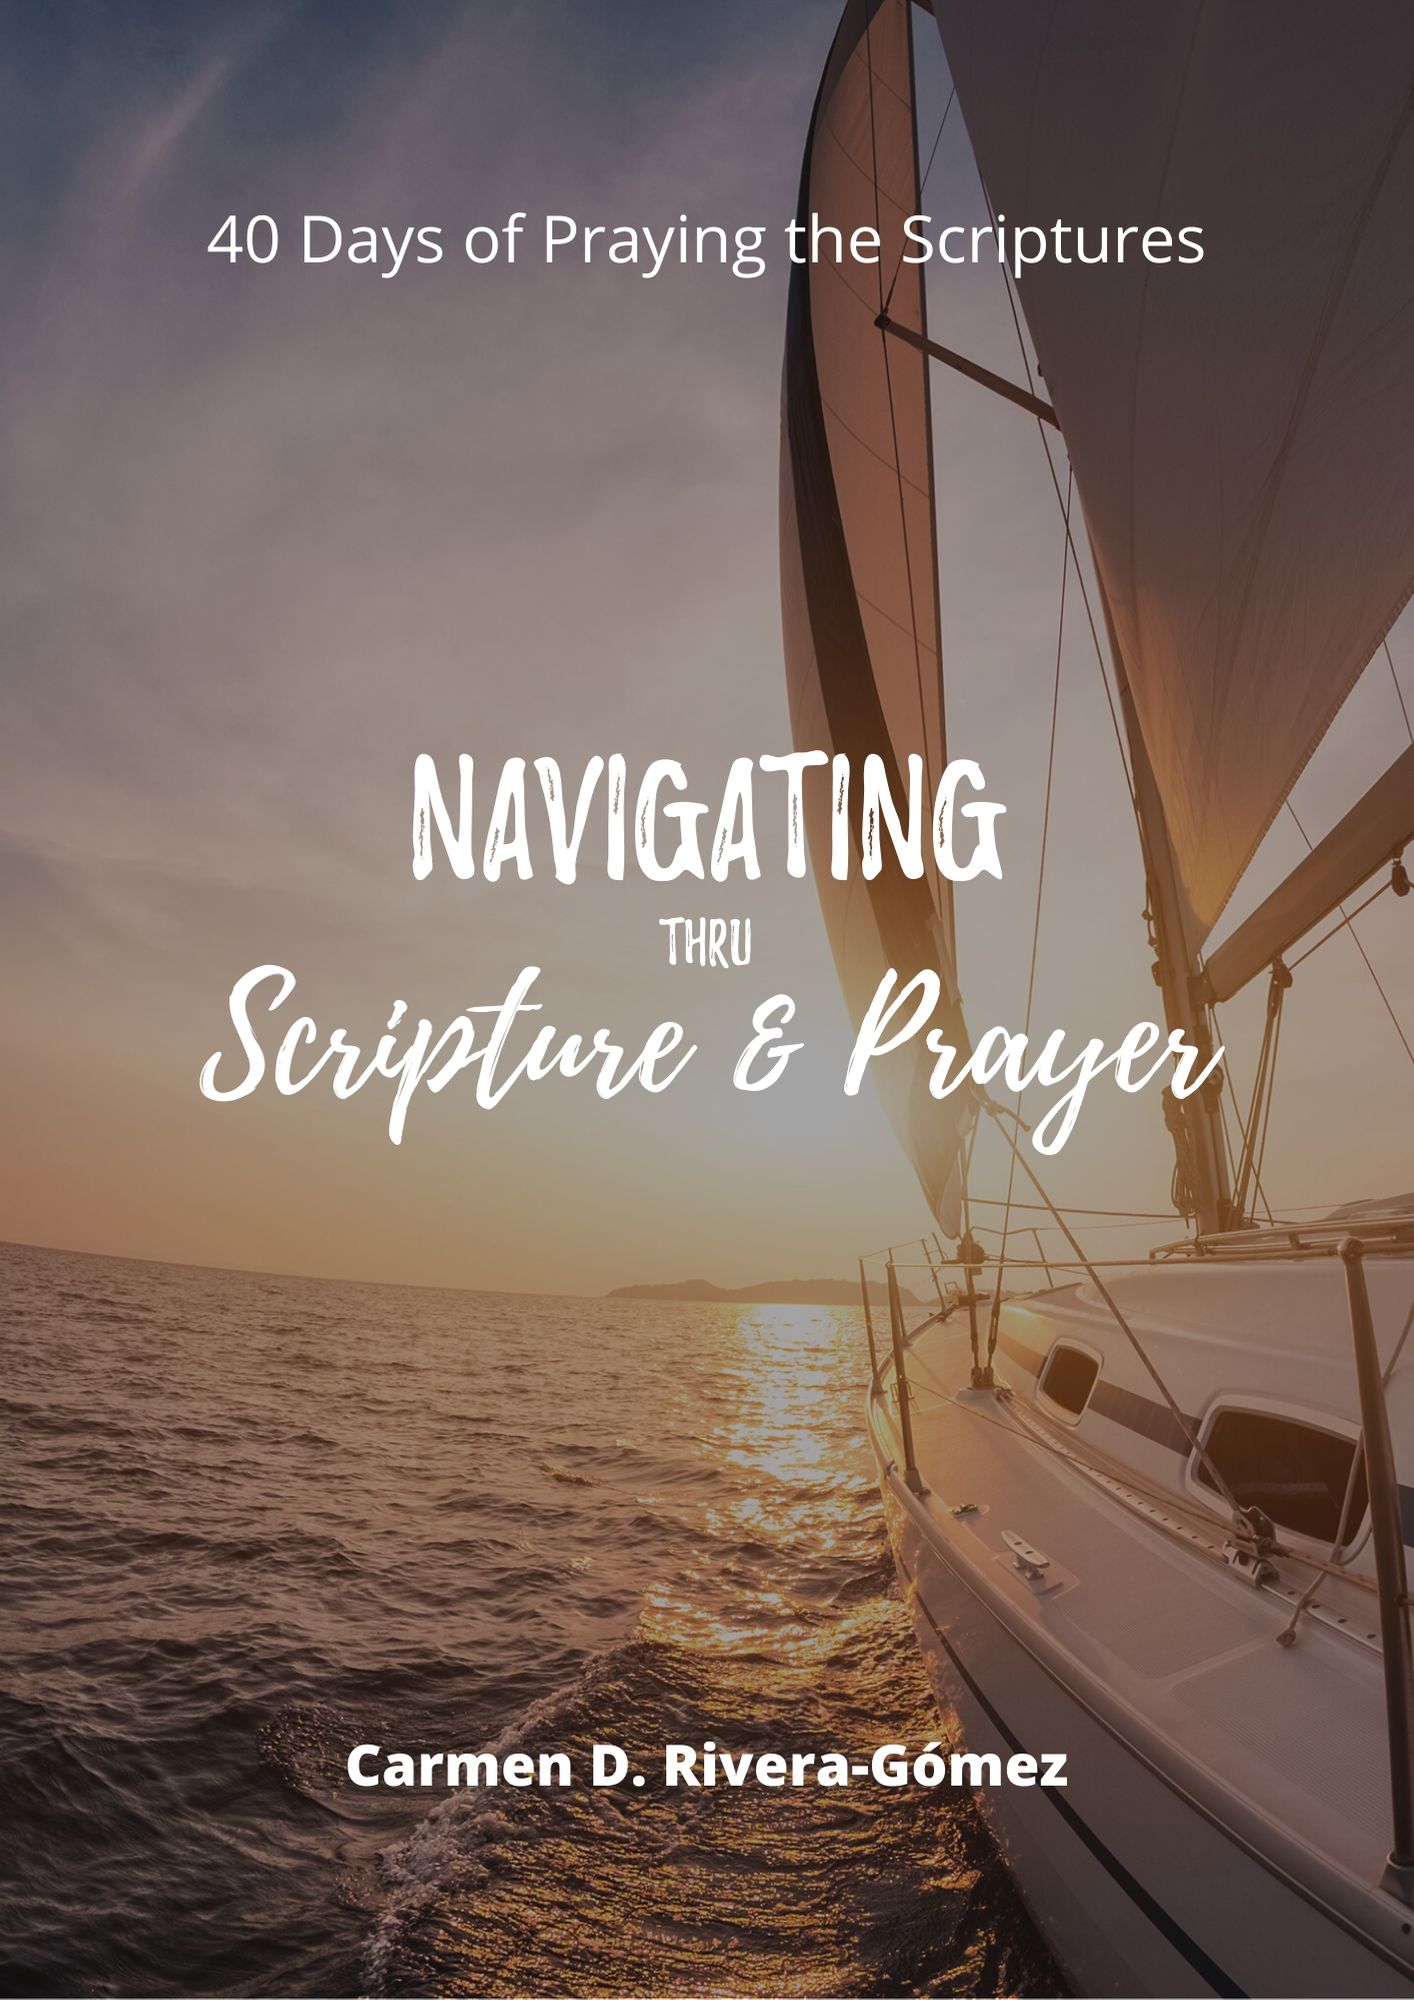 prayer journal prompts